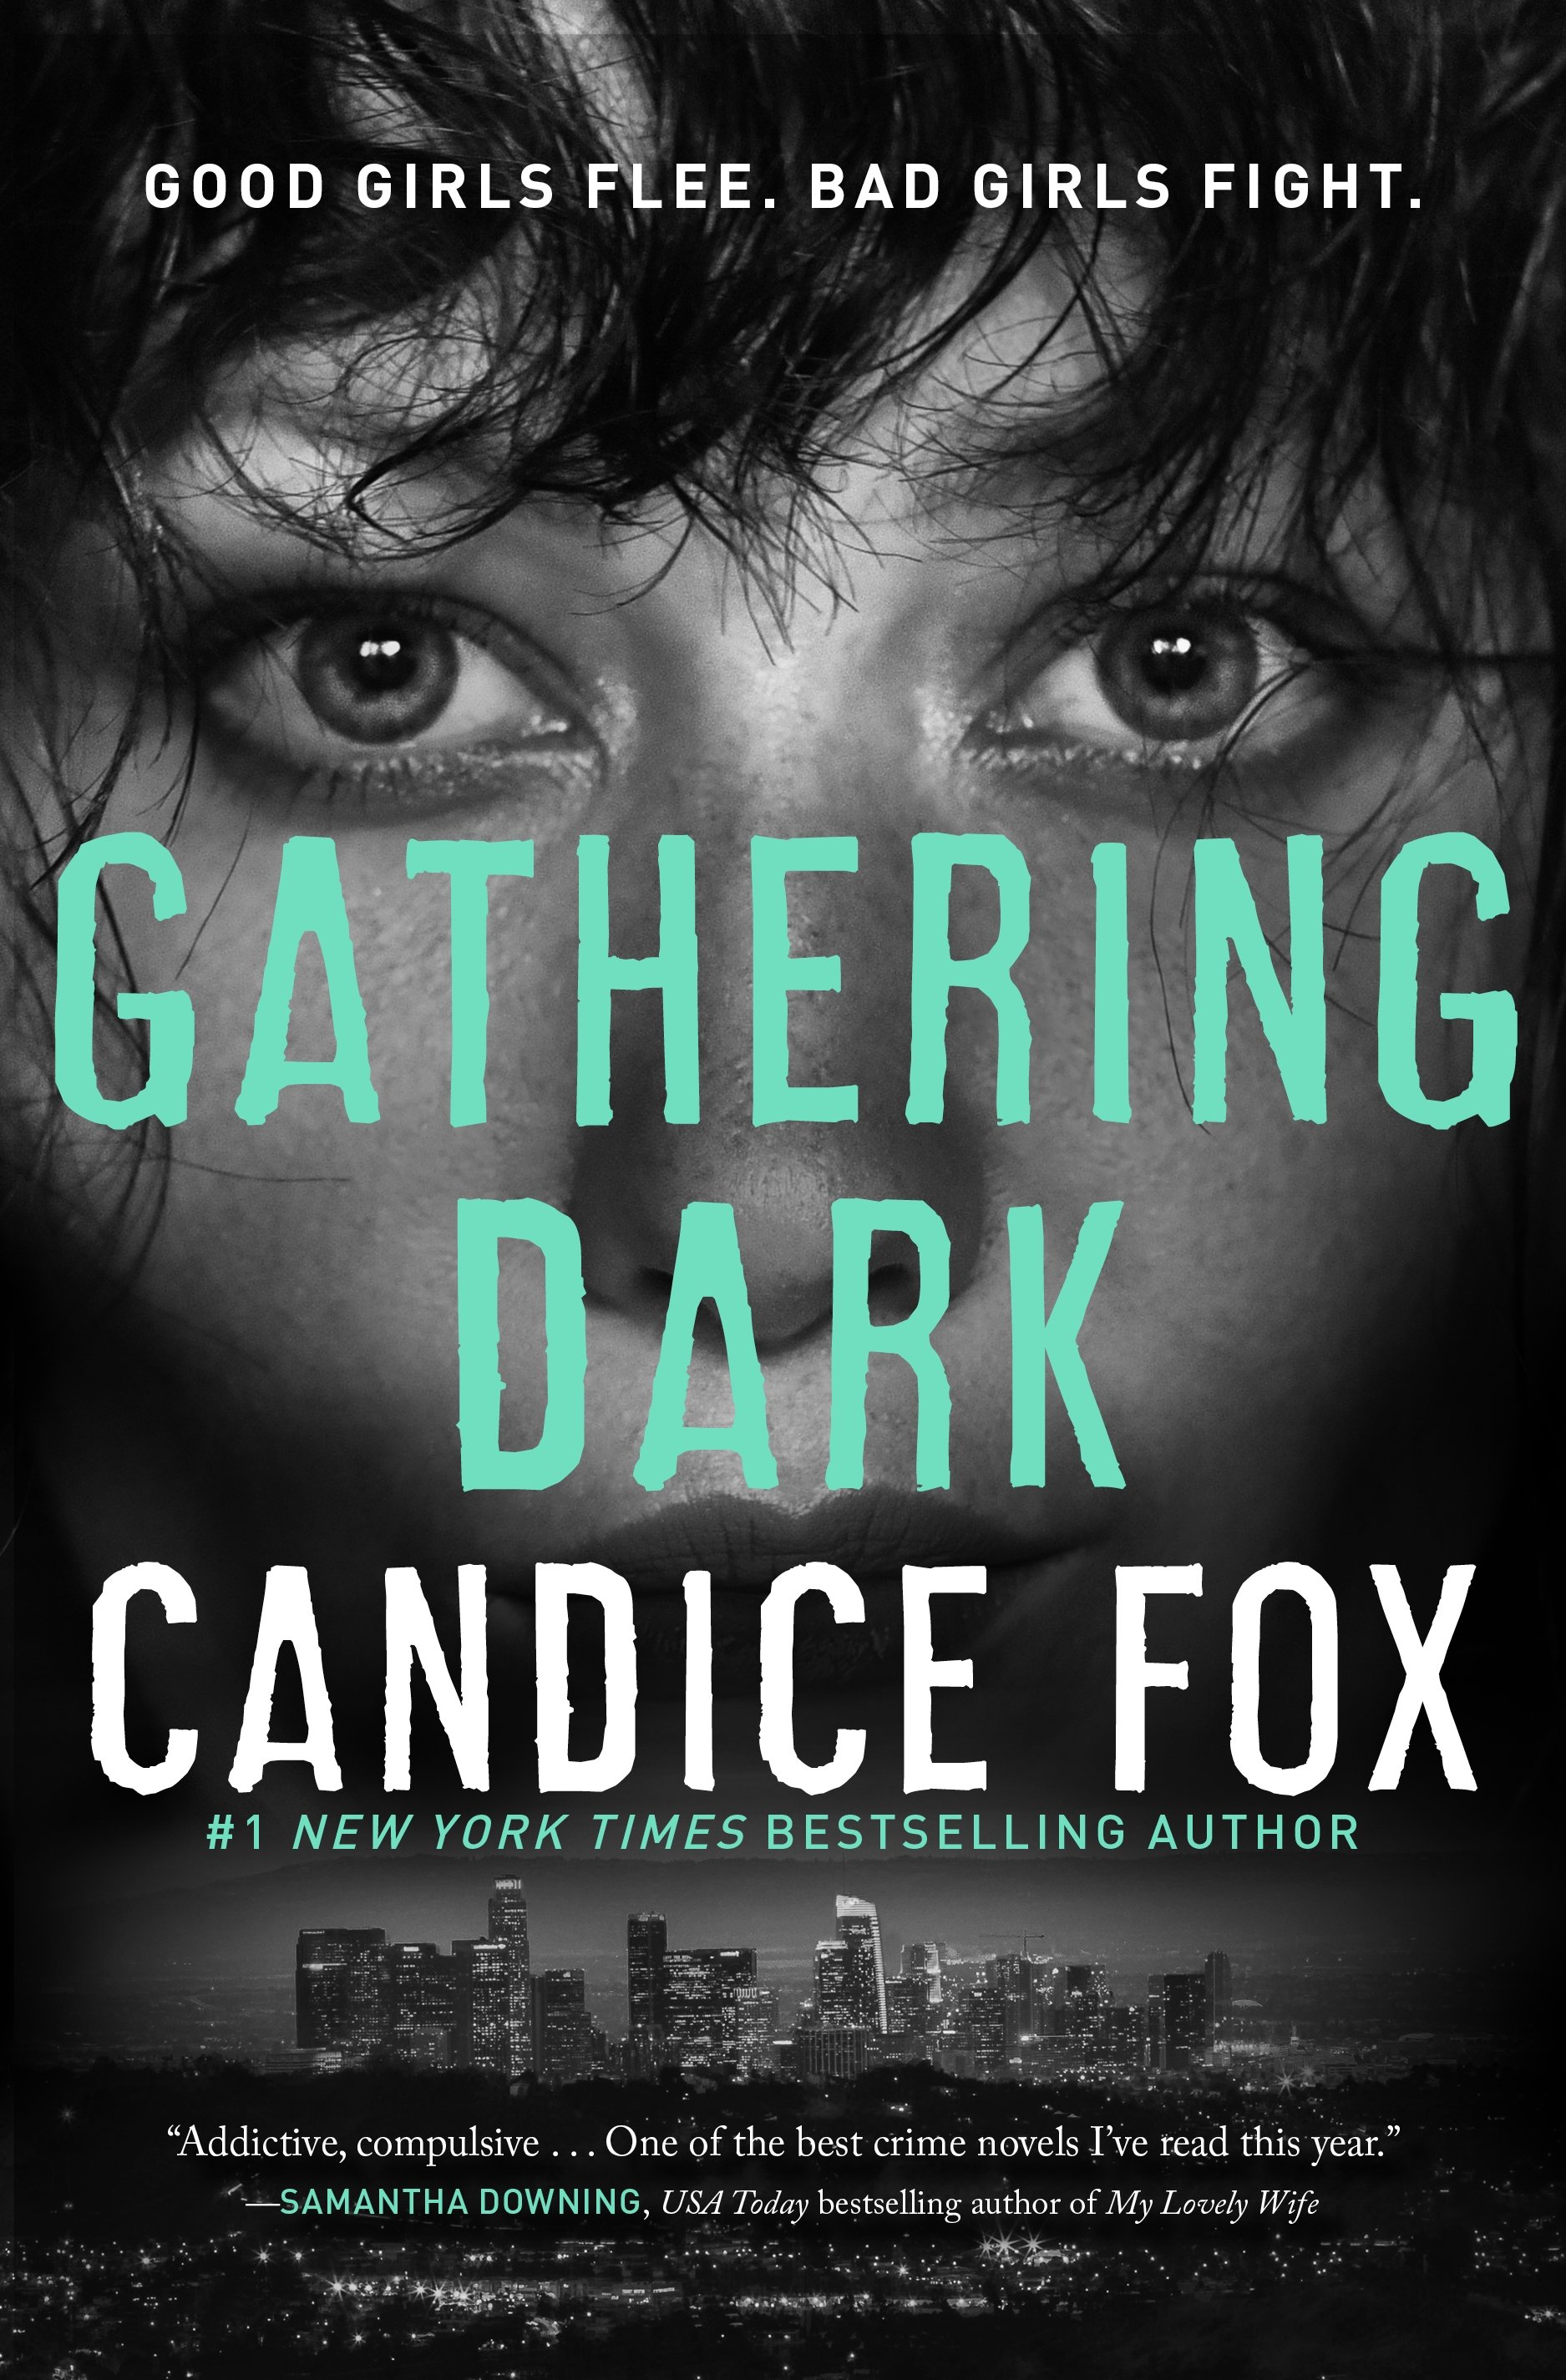 Book “Gathering Dark” by Candice Fox — March 16, 2021